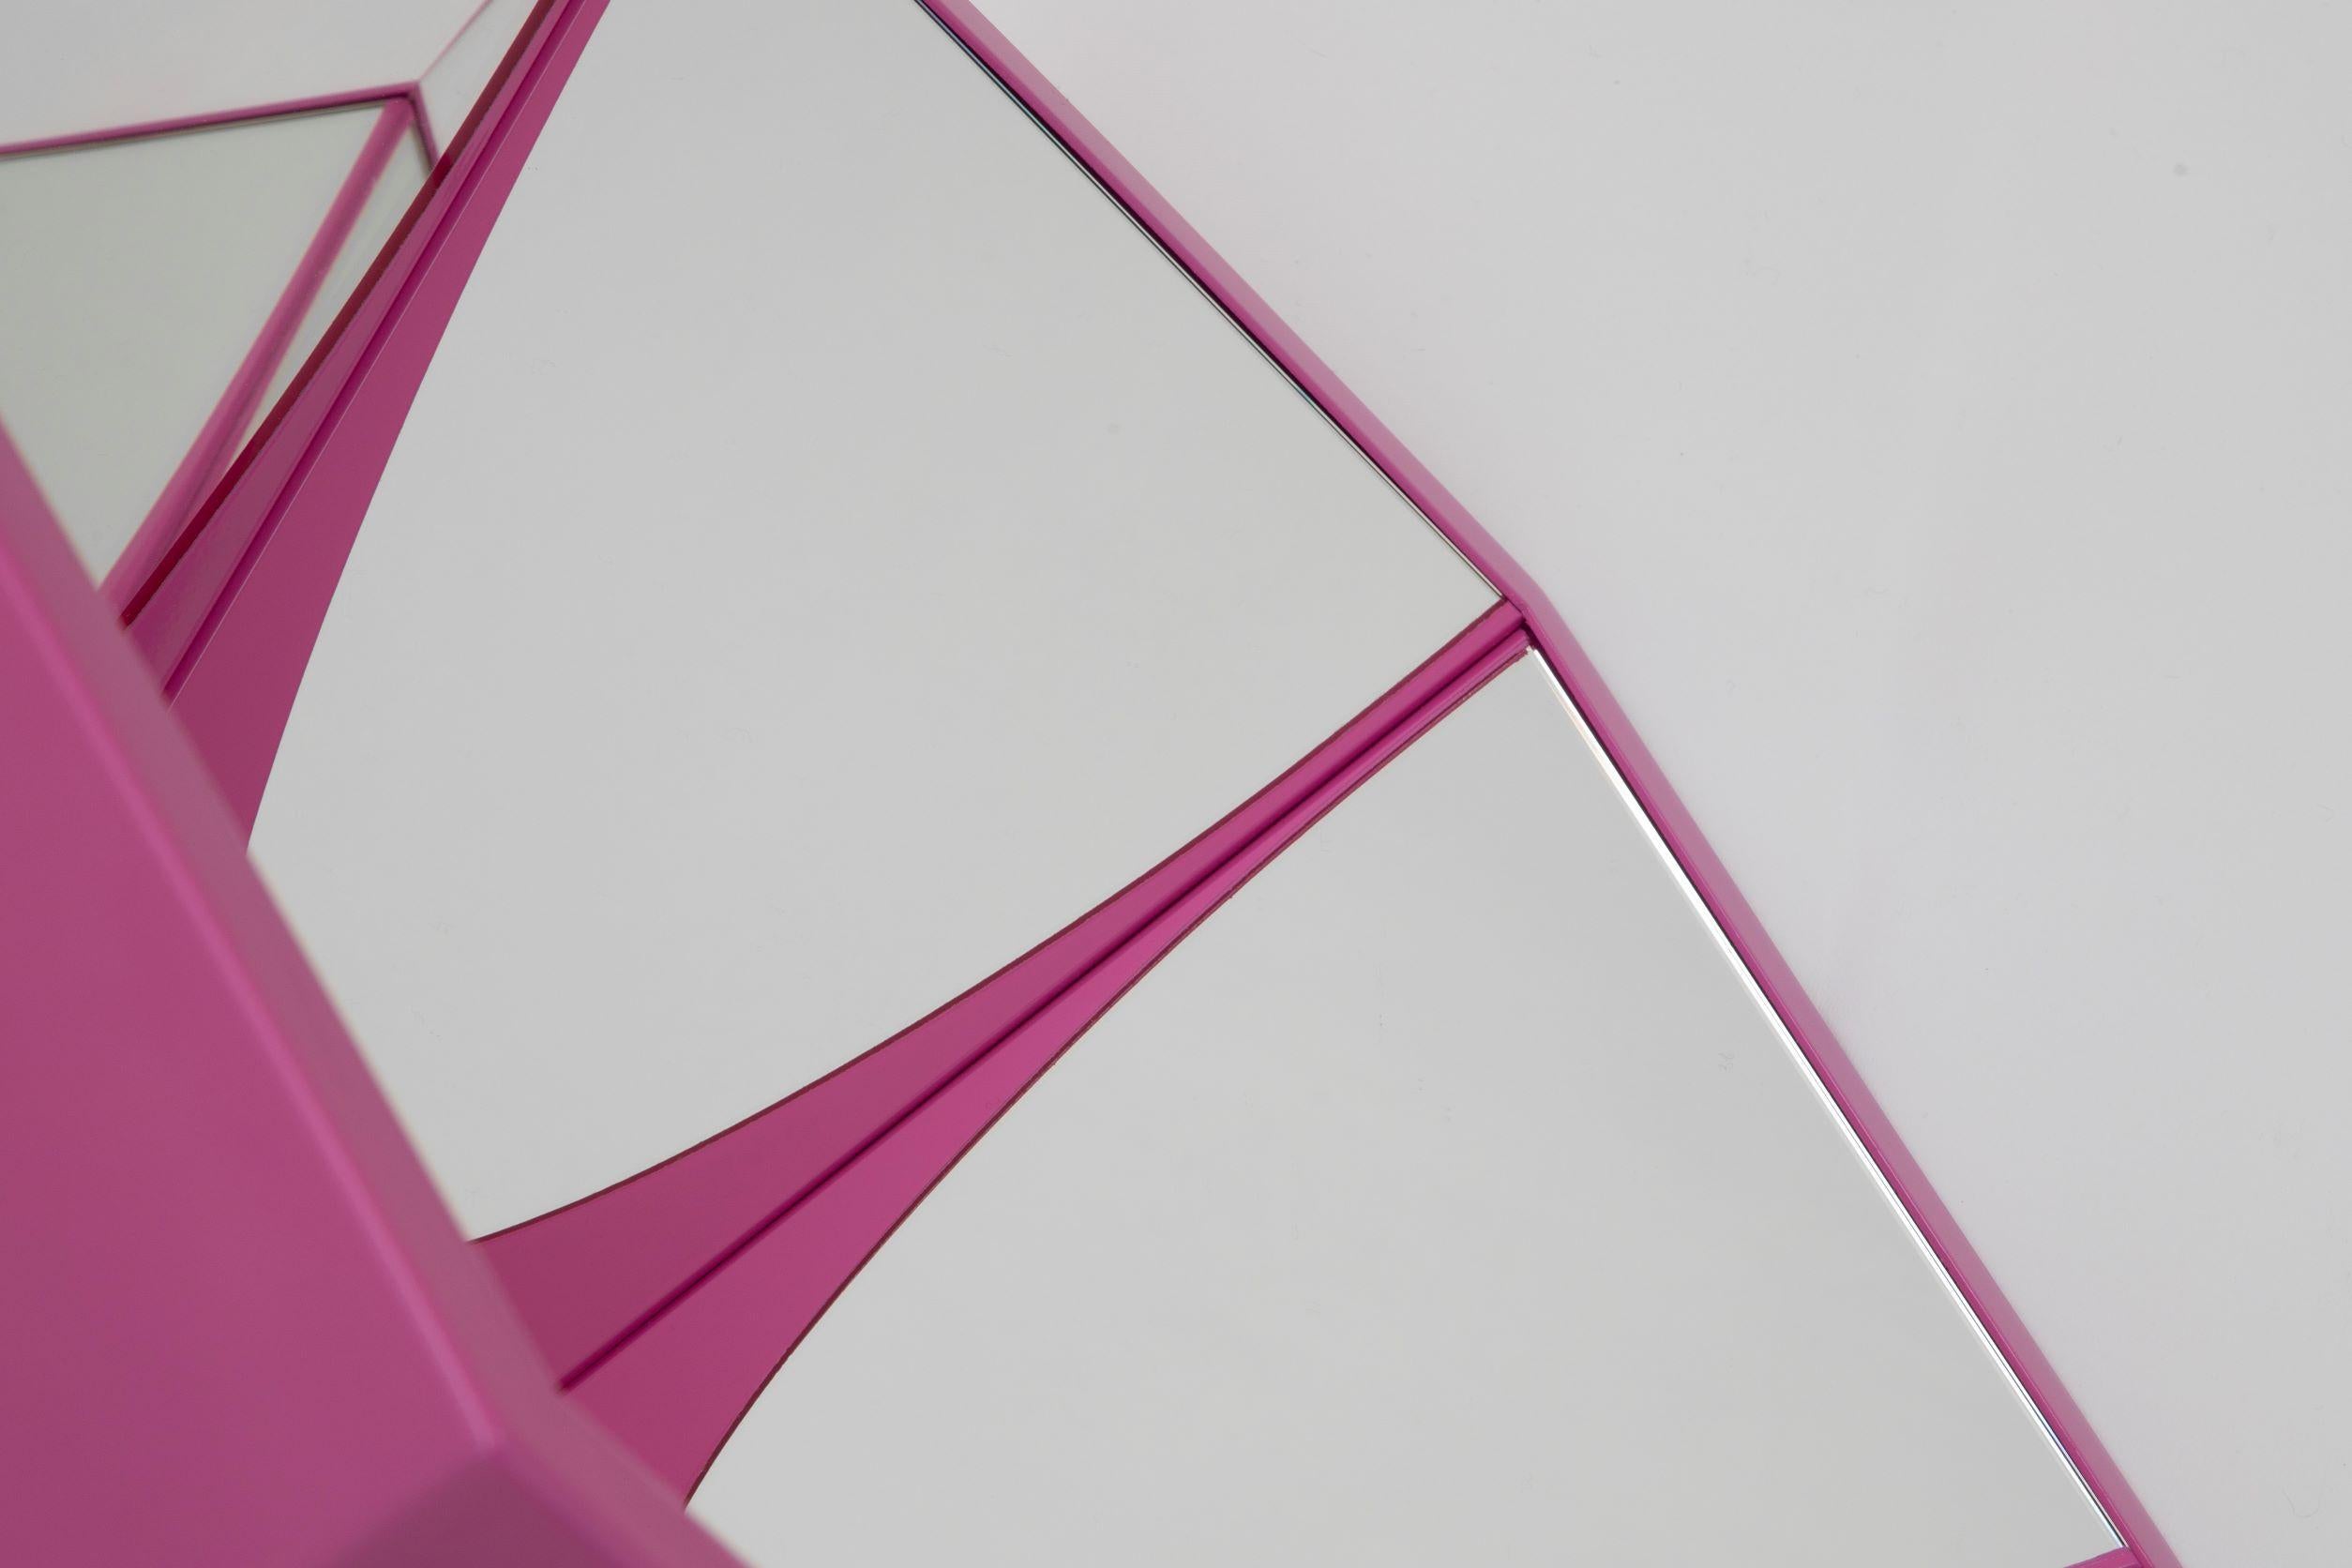 Chiara Dynys, Kaleidos, 2020, sculpture, mirror, pink - Contemporary Mixed Media Art by Chiara Dynys 